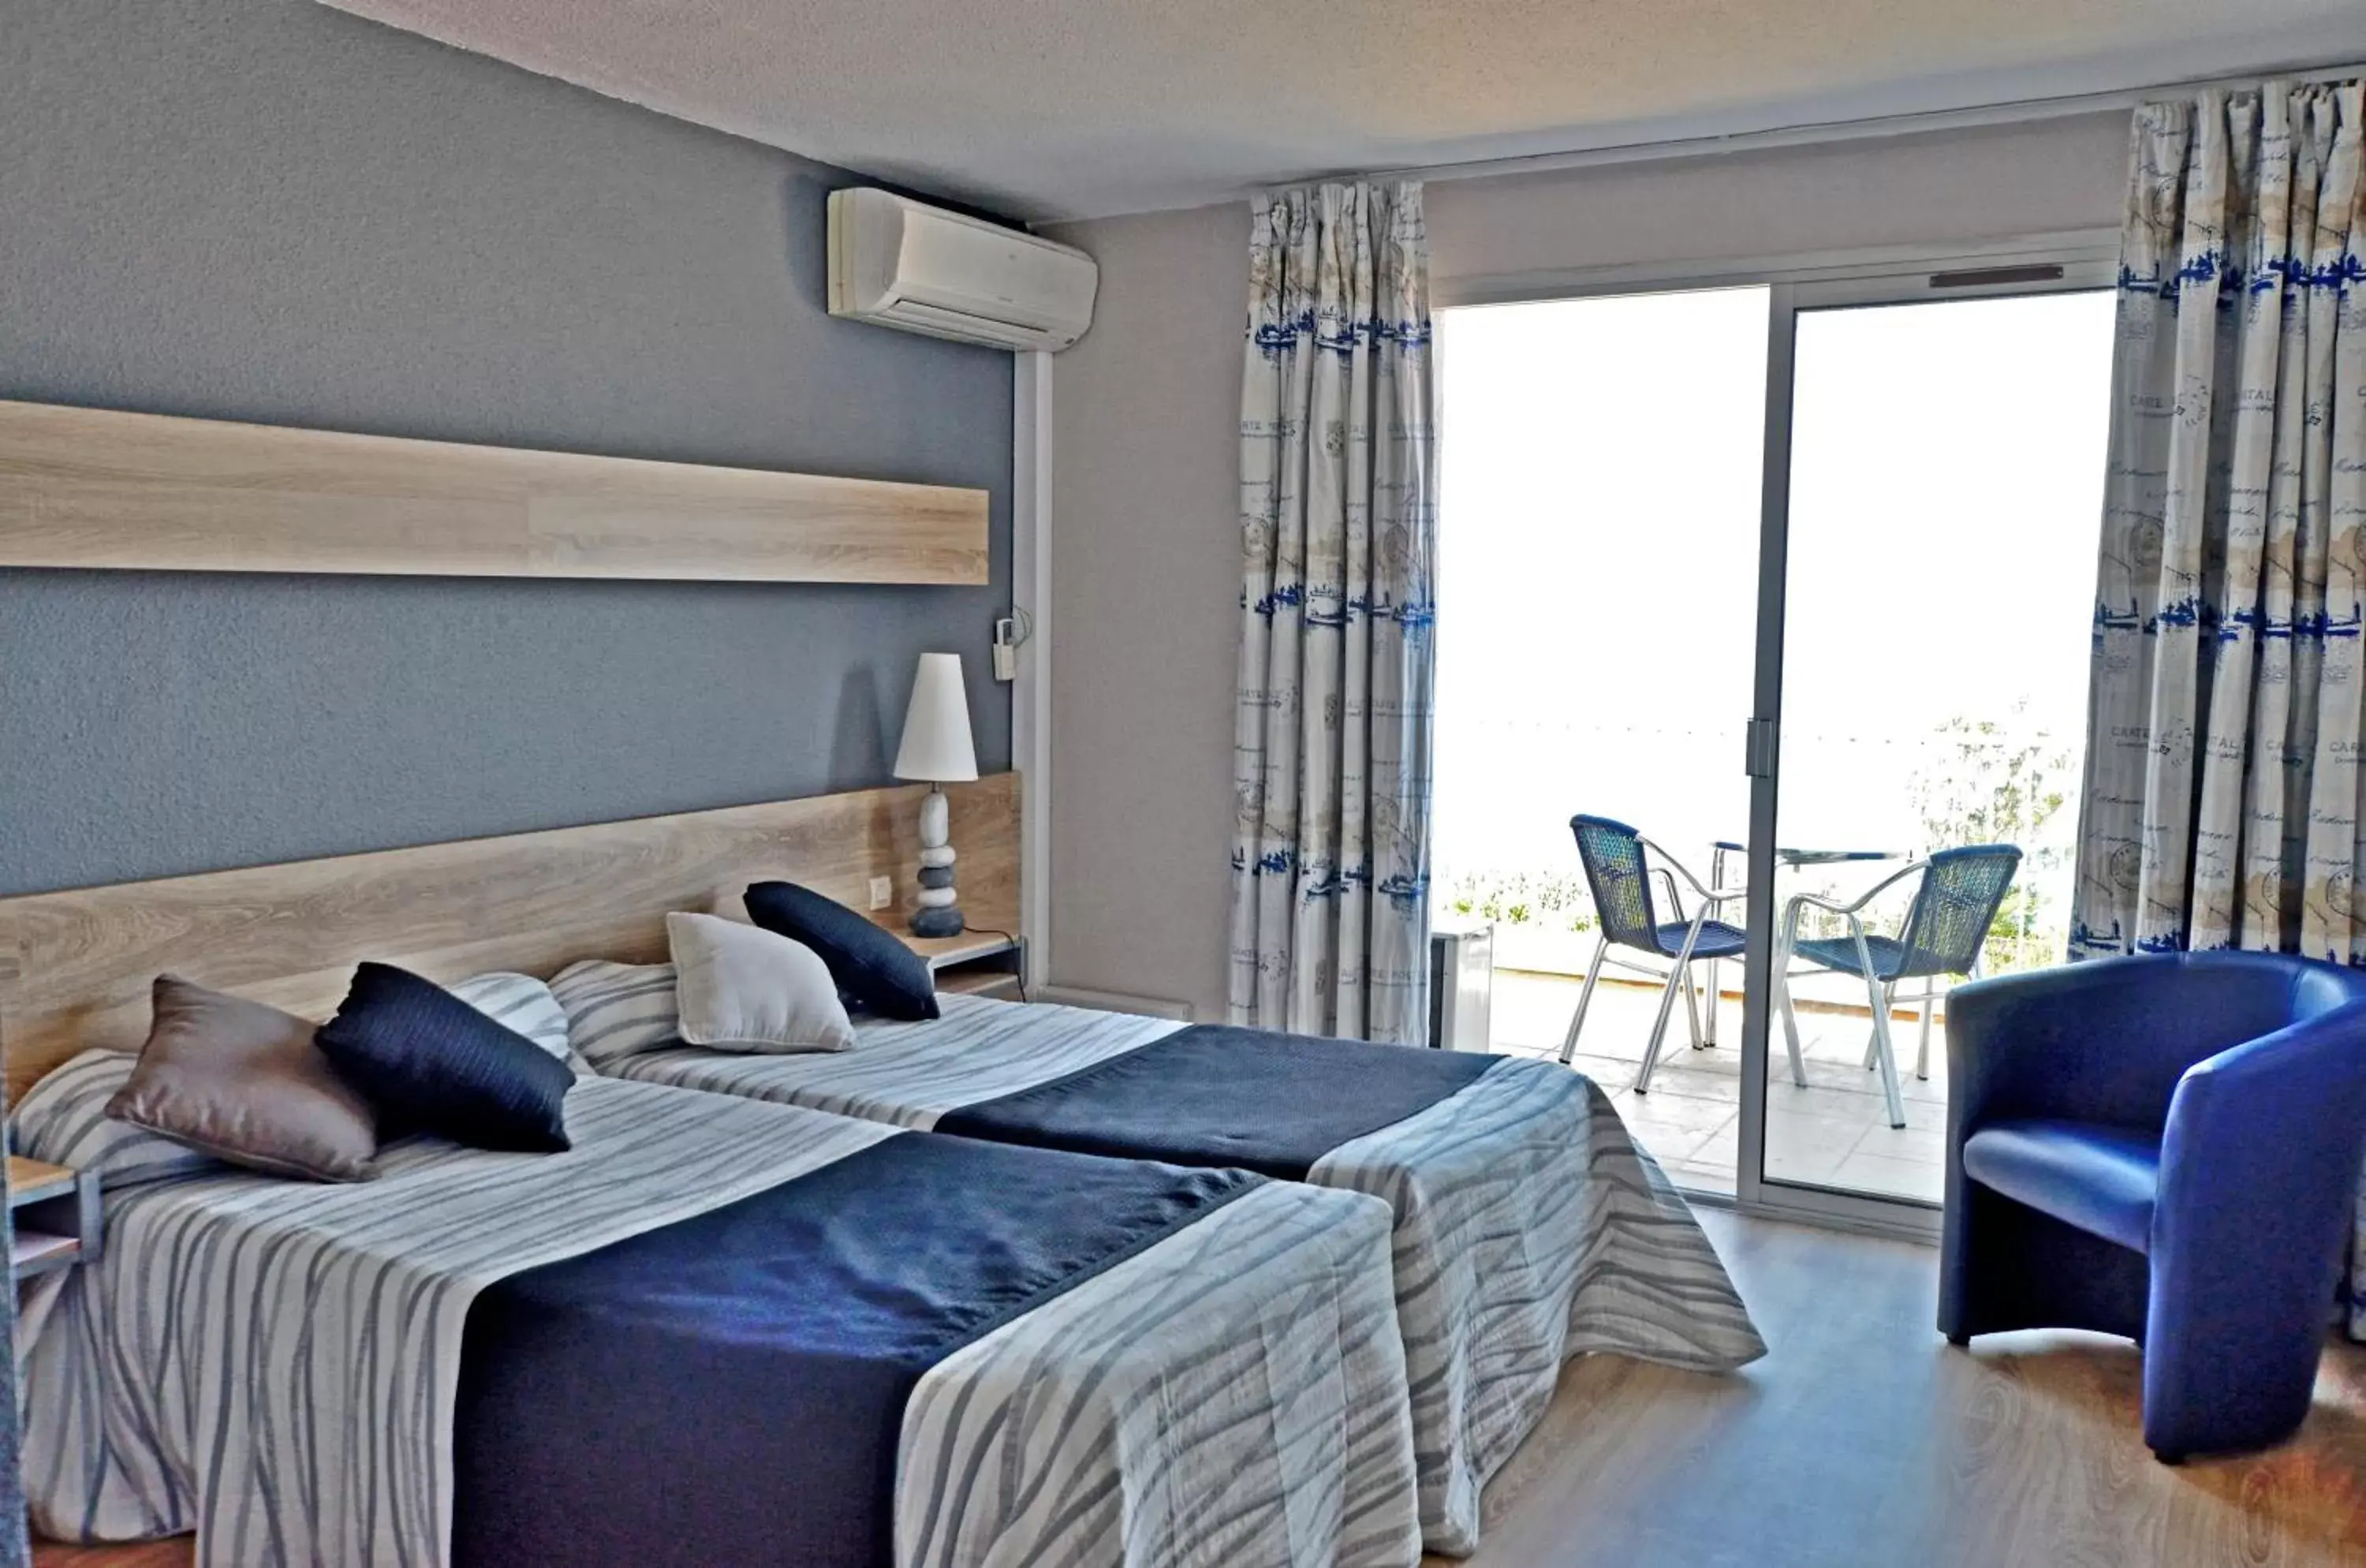 Bedroom, Room Photo in Logis Hotel Solhotel